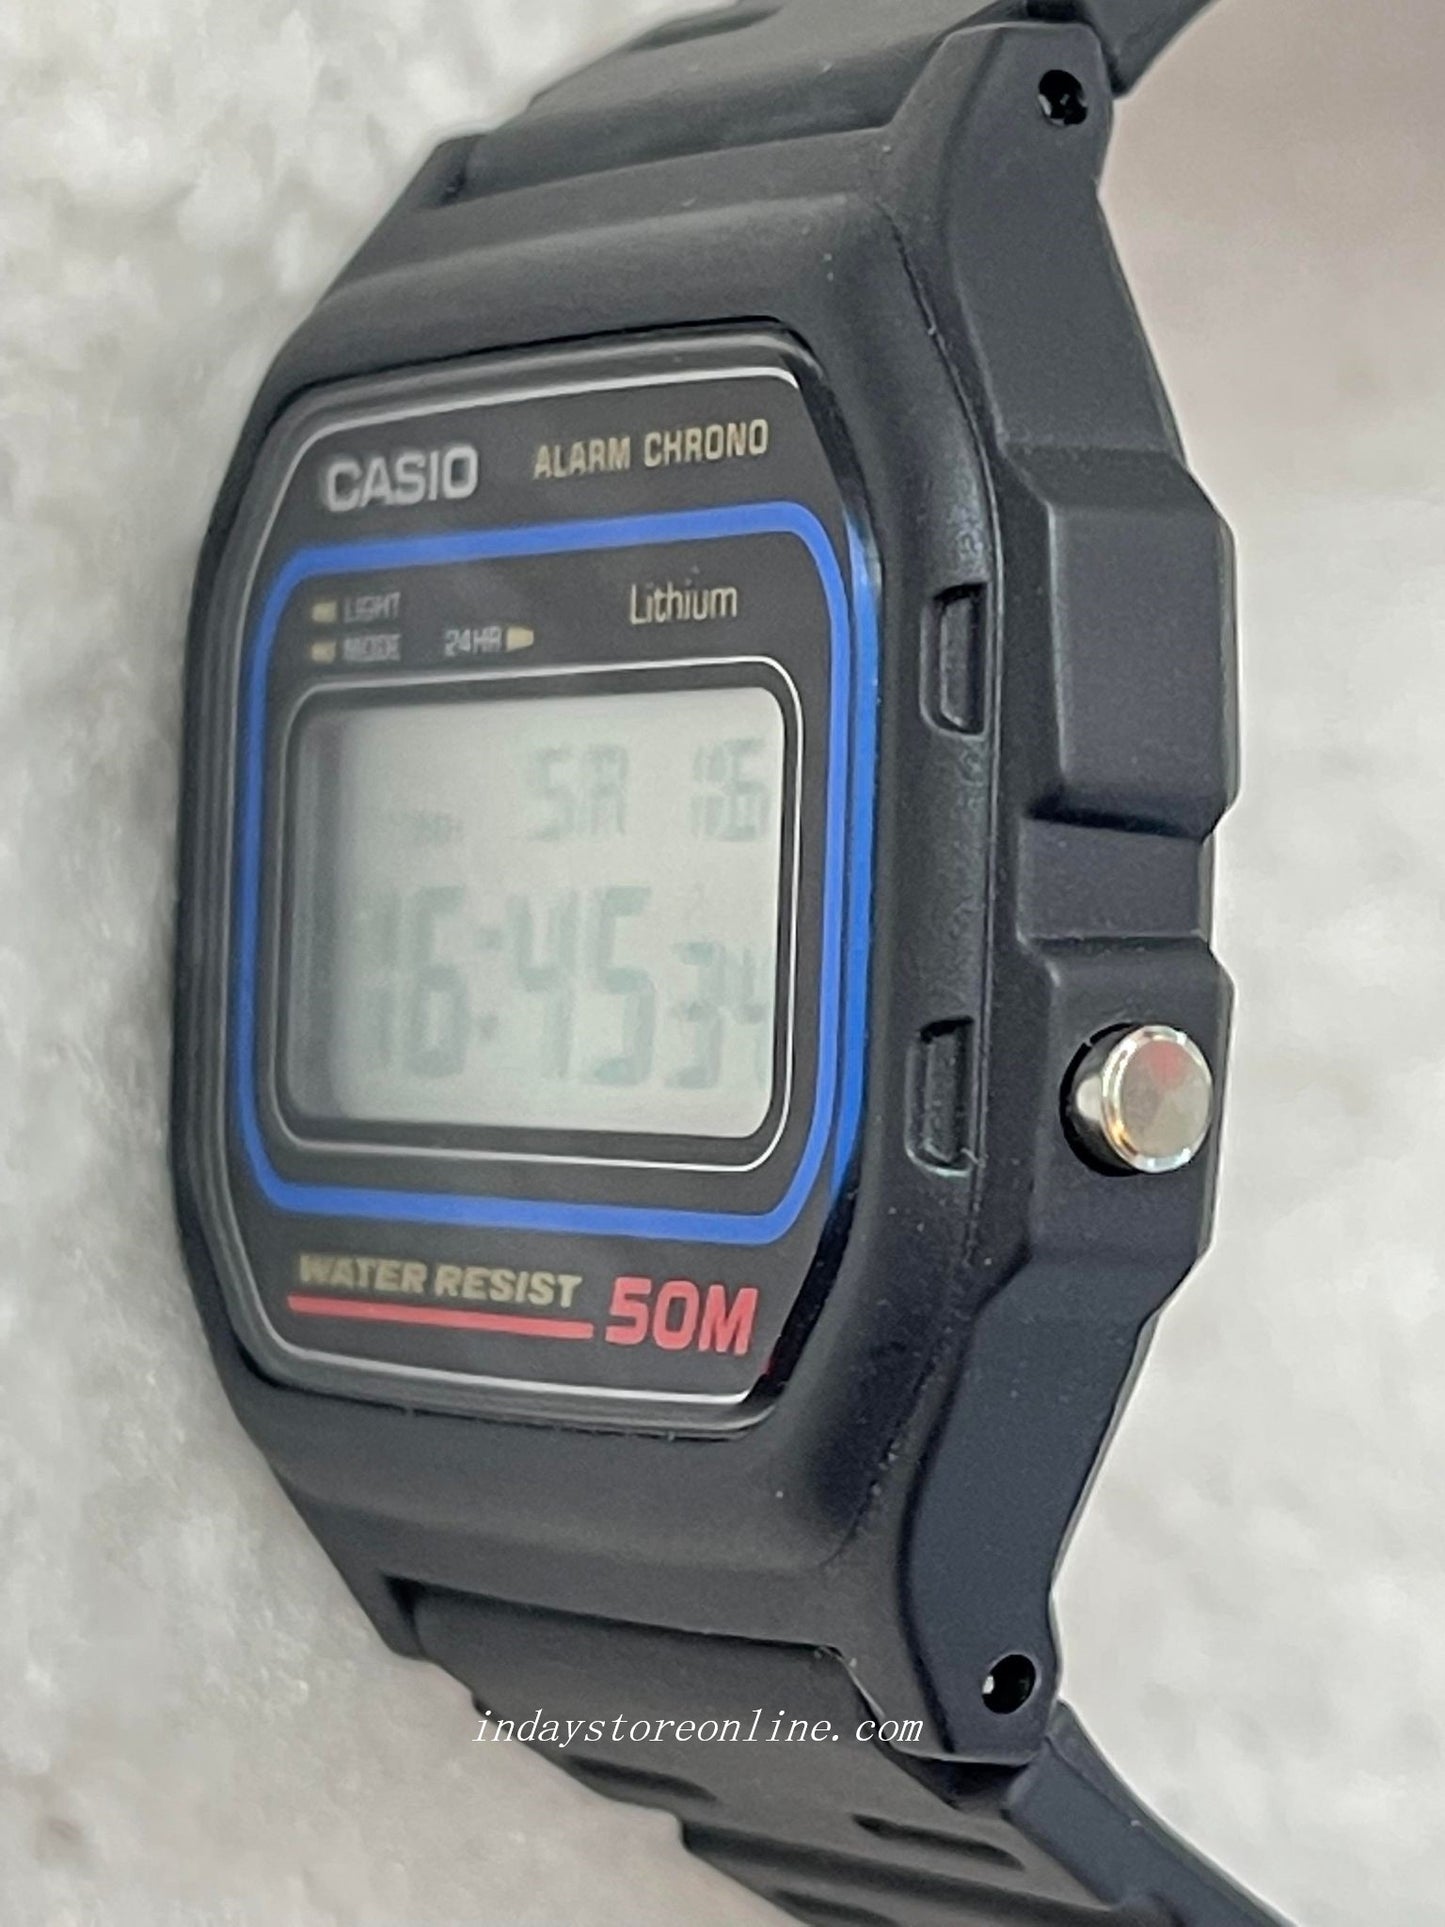 Casio Digital Women's Watch W-59-1V Black Color Resin Strap